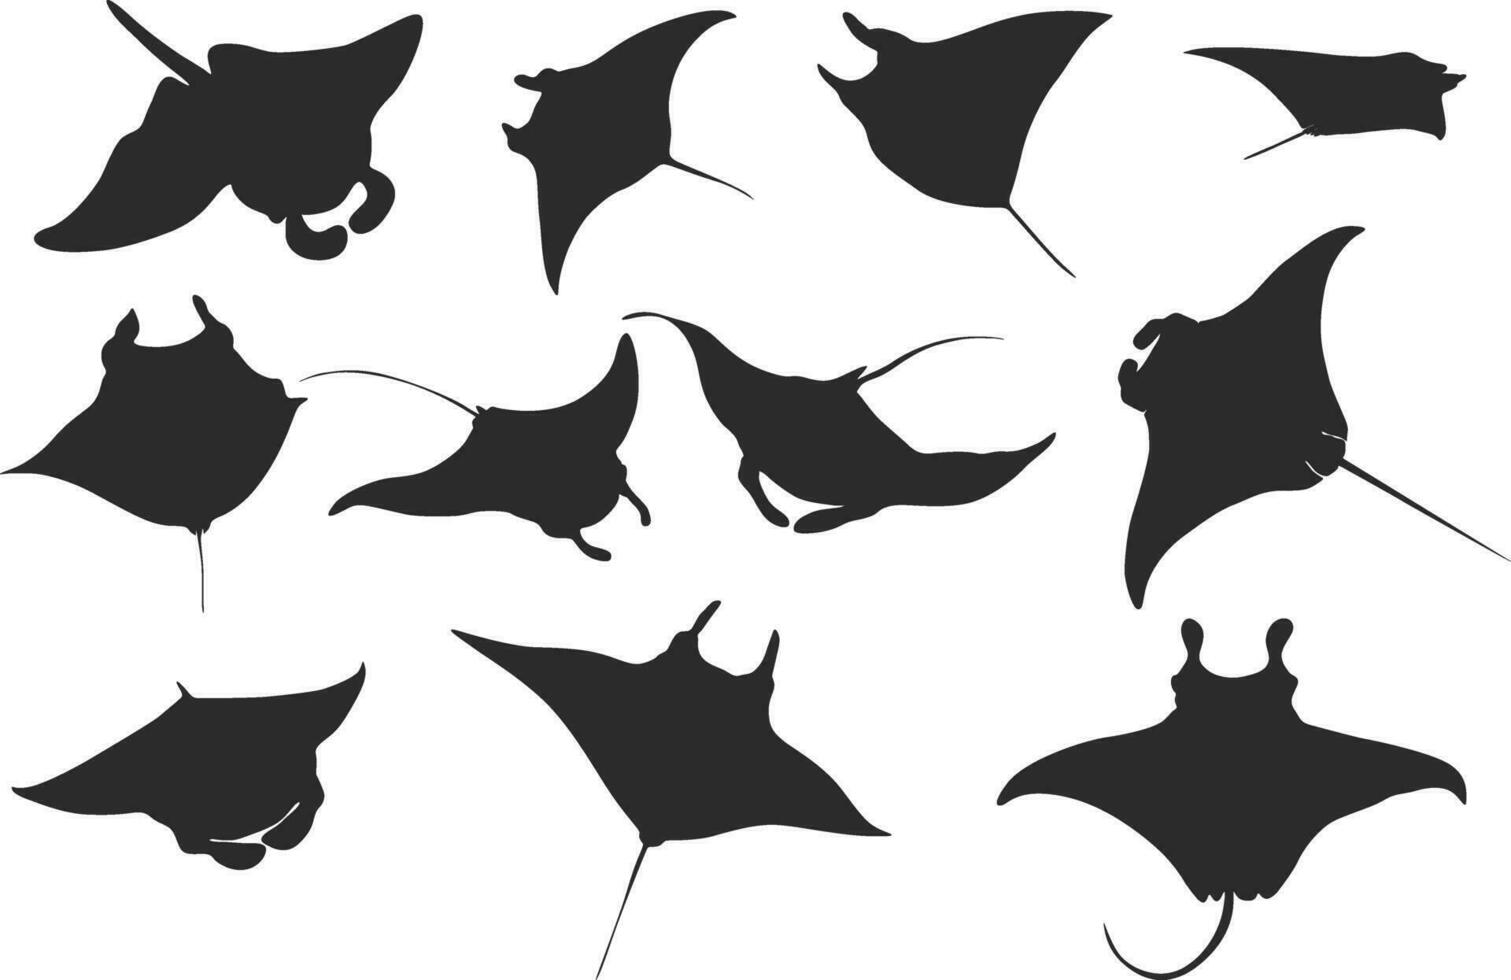 Manta ray silhouette, Manta ray vector, Manta ray clipart, Stingray icon bundle. vector